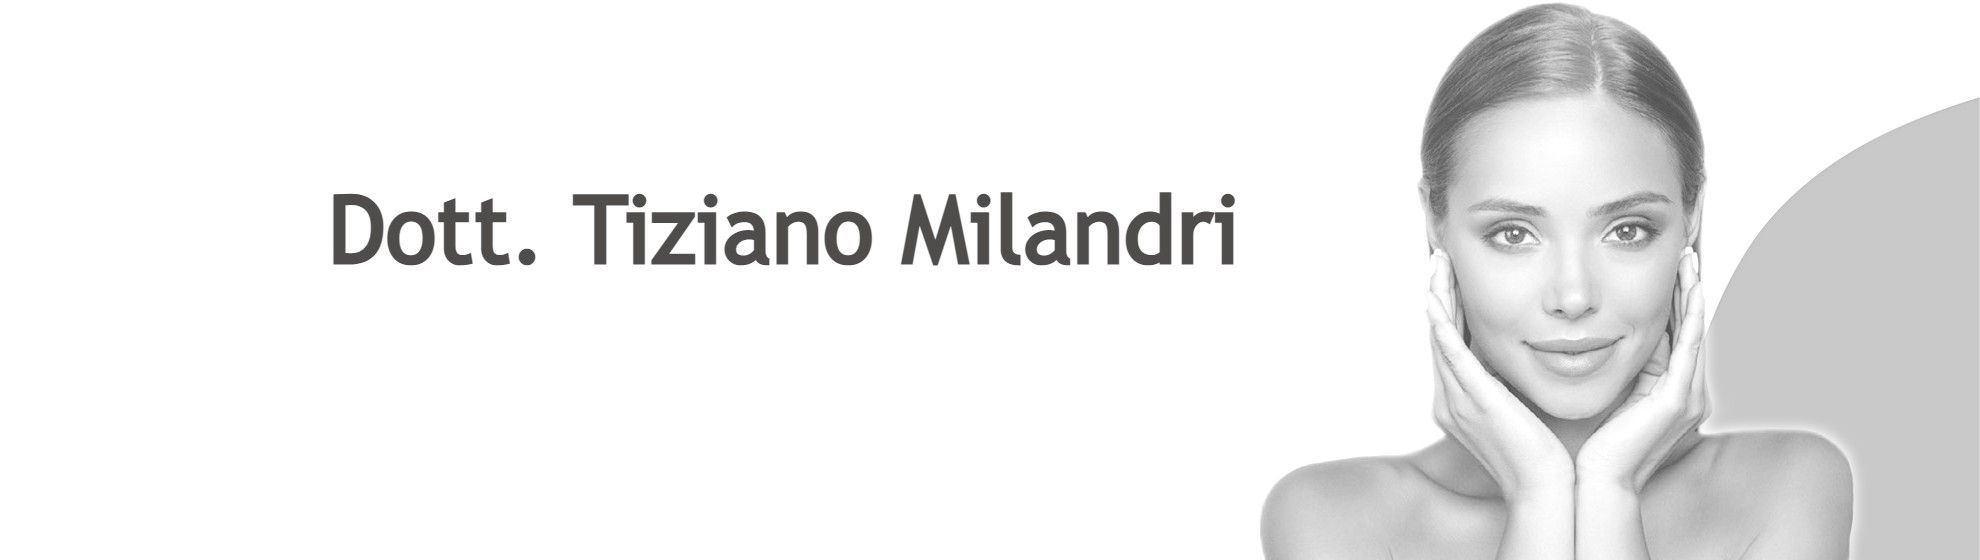 Dott. Tiziano Milandri